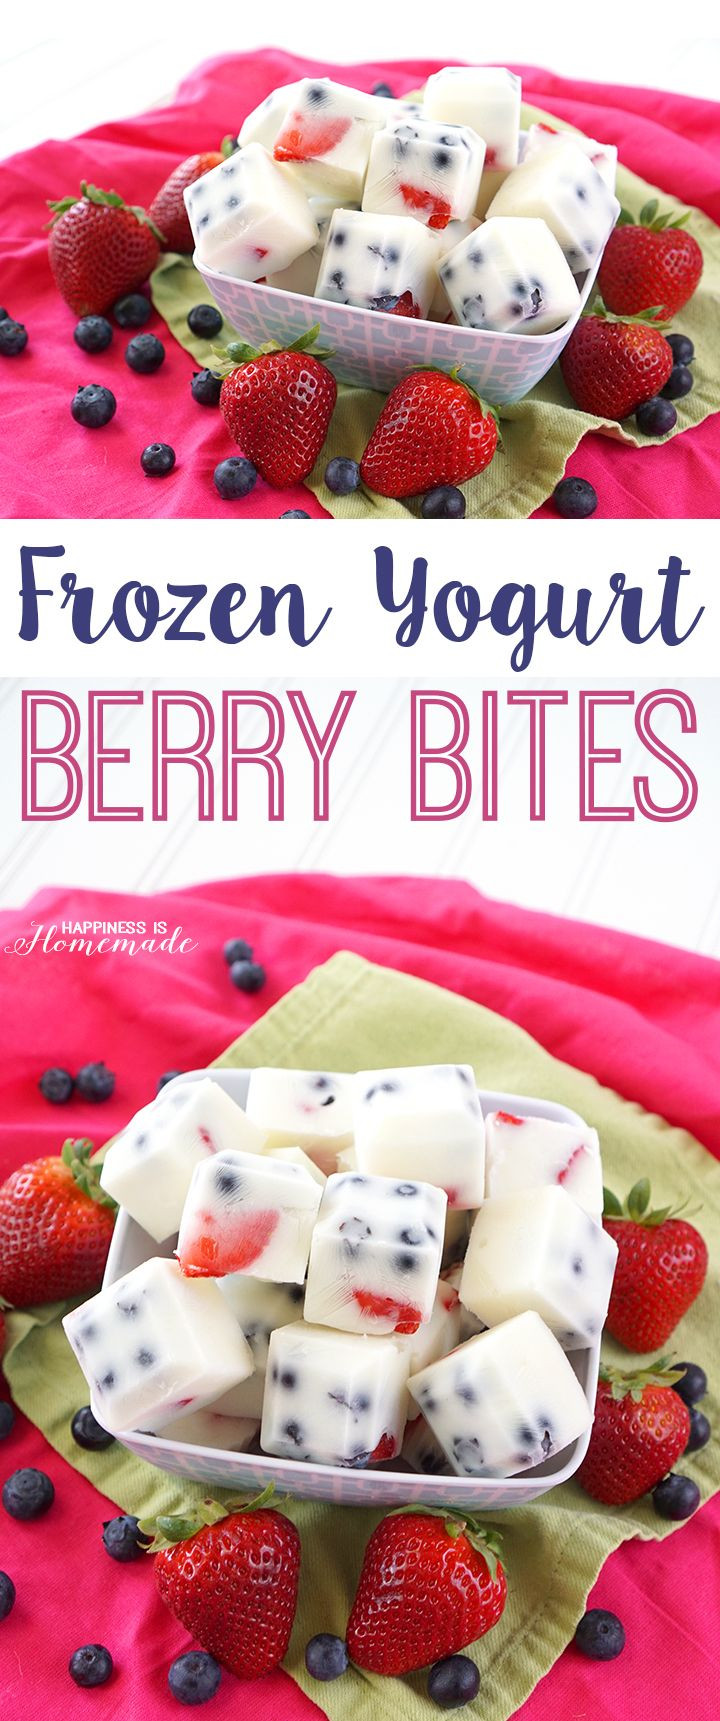 Healthy Fruit Snacks For Adults
 Frozen Yogurt Berry Bites Recipe